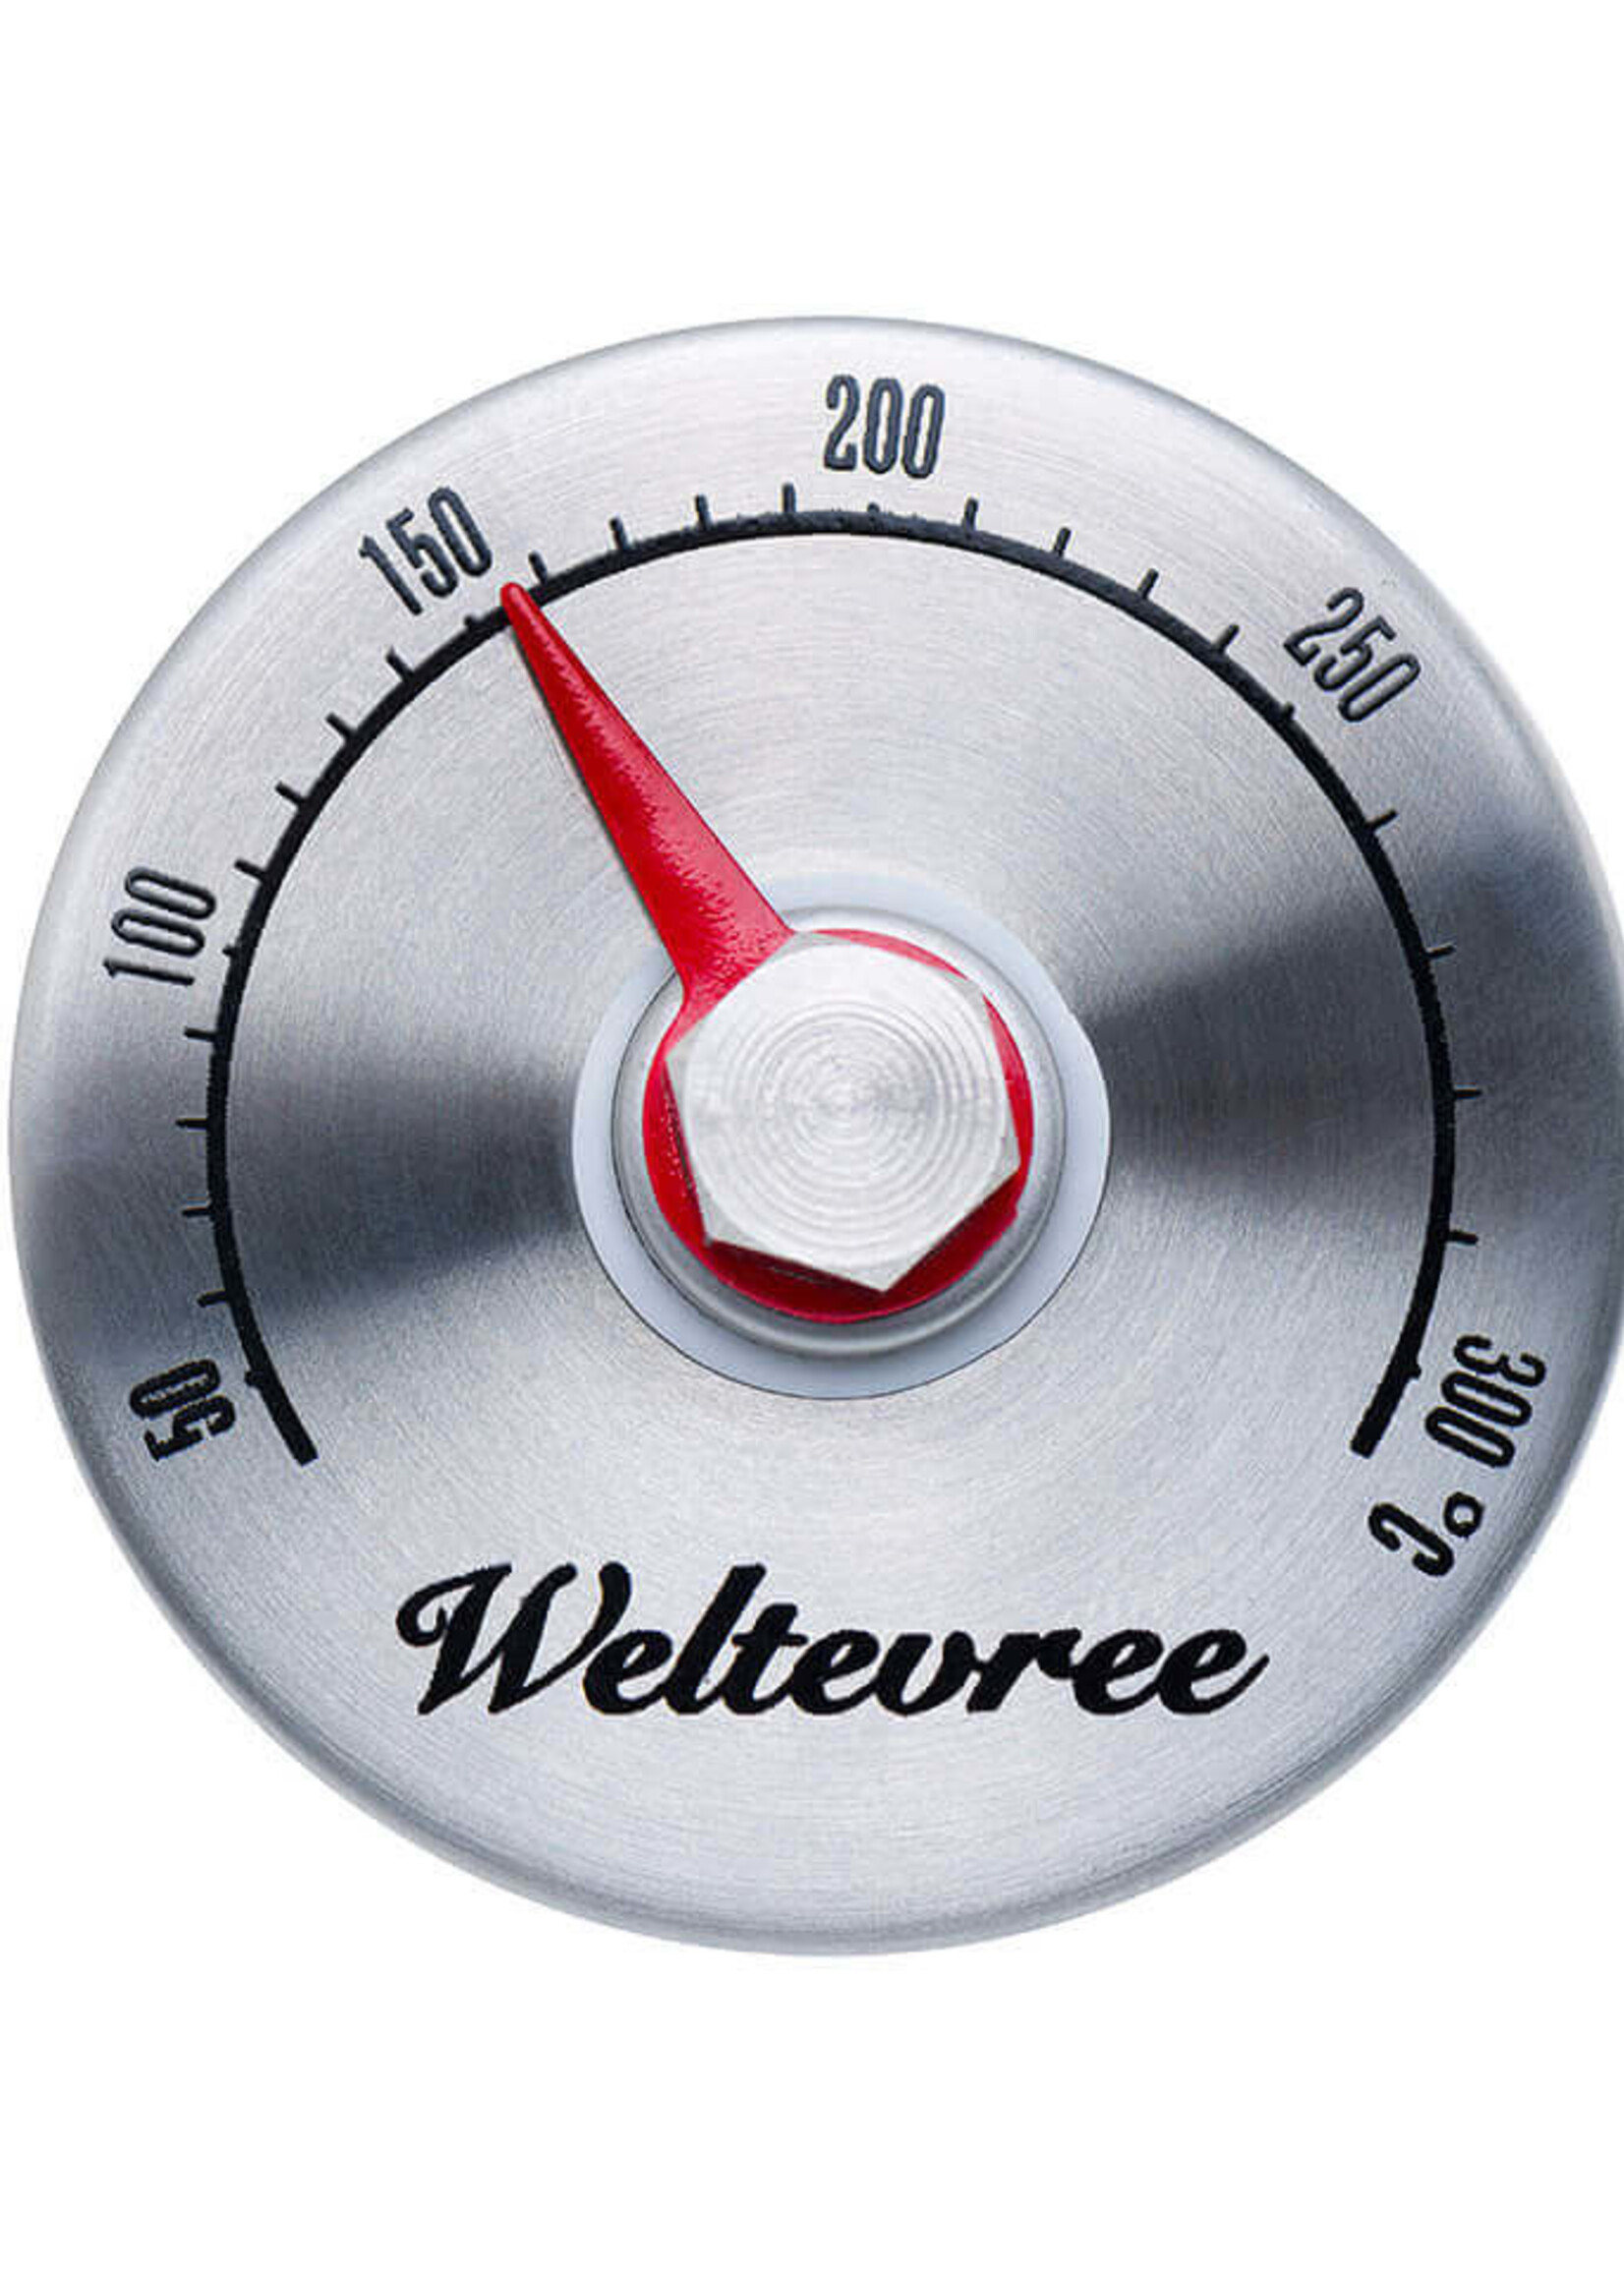 Weltevree Weltevree Outdooroven Thermometer